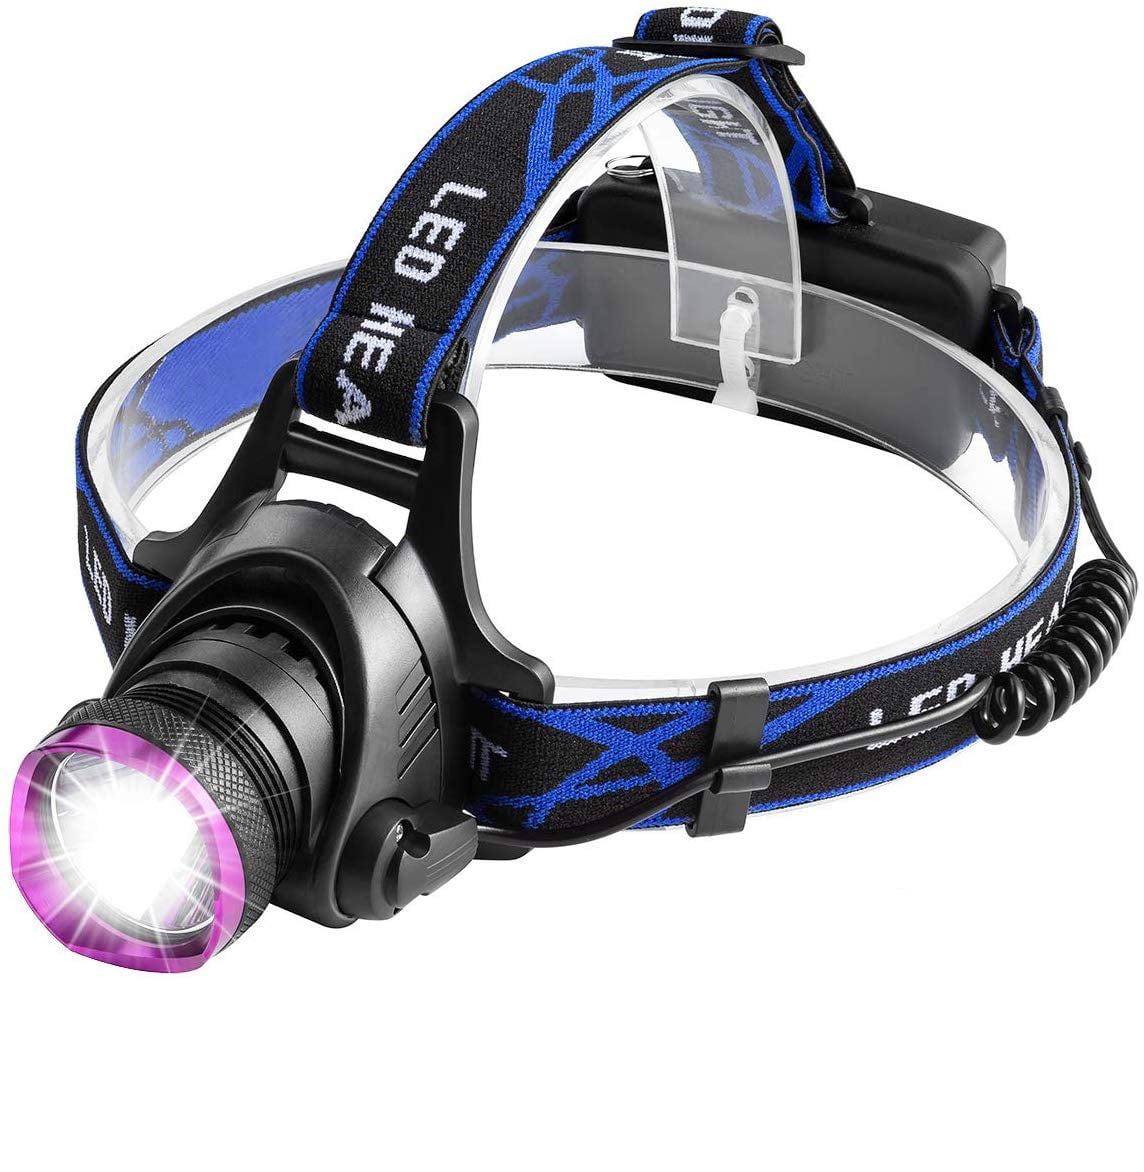 Bright LED Headlamp Headlight Fishing Flashlight Zoom Torch Red Head Light 3mode 